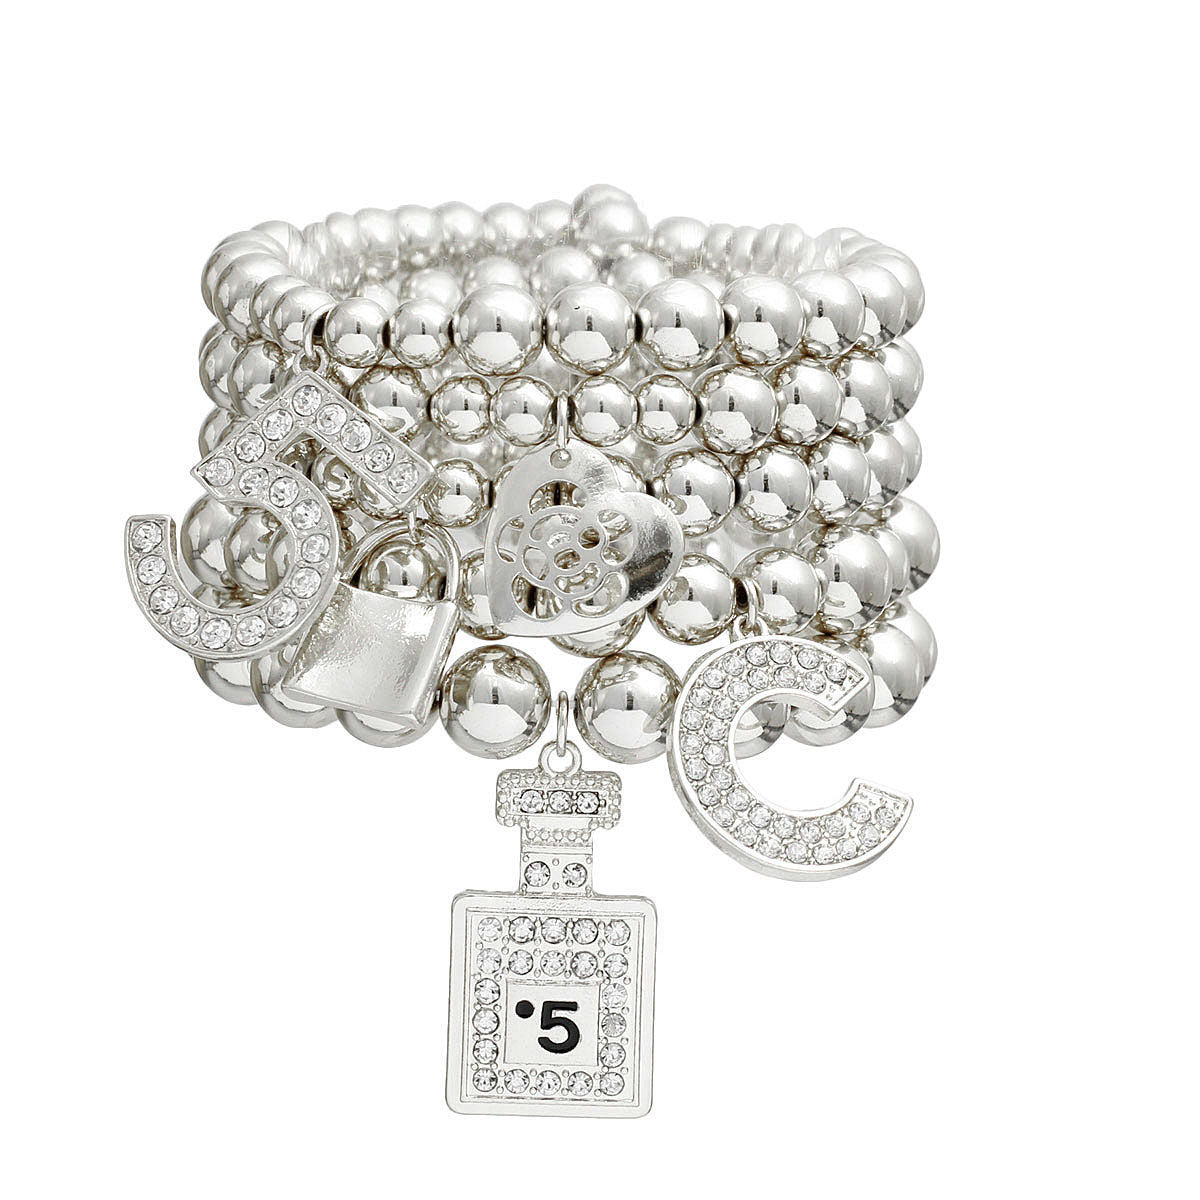 Shiny Silver Boutique Charm Bracelets